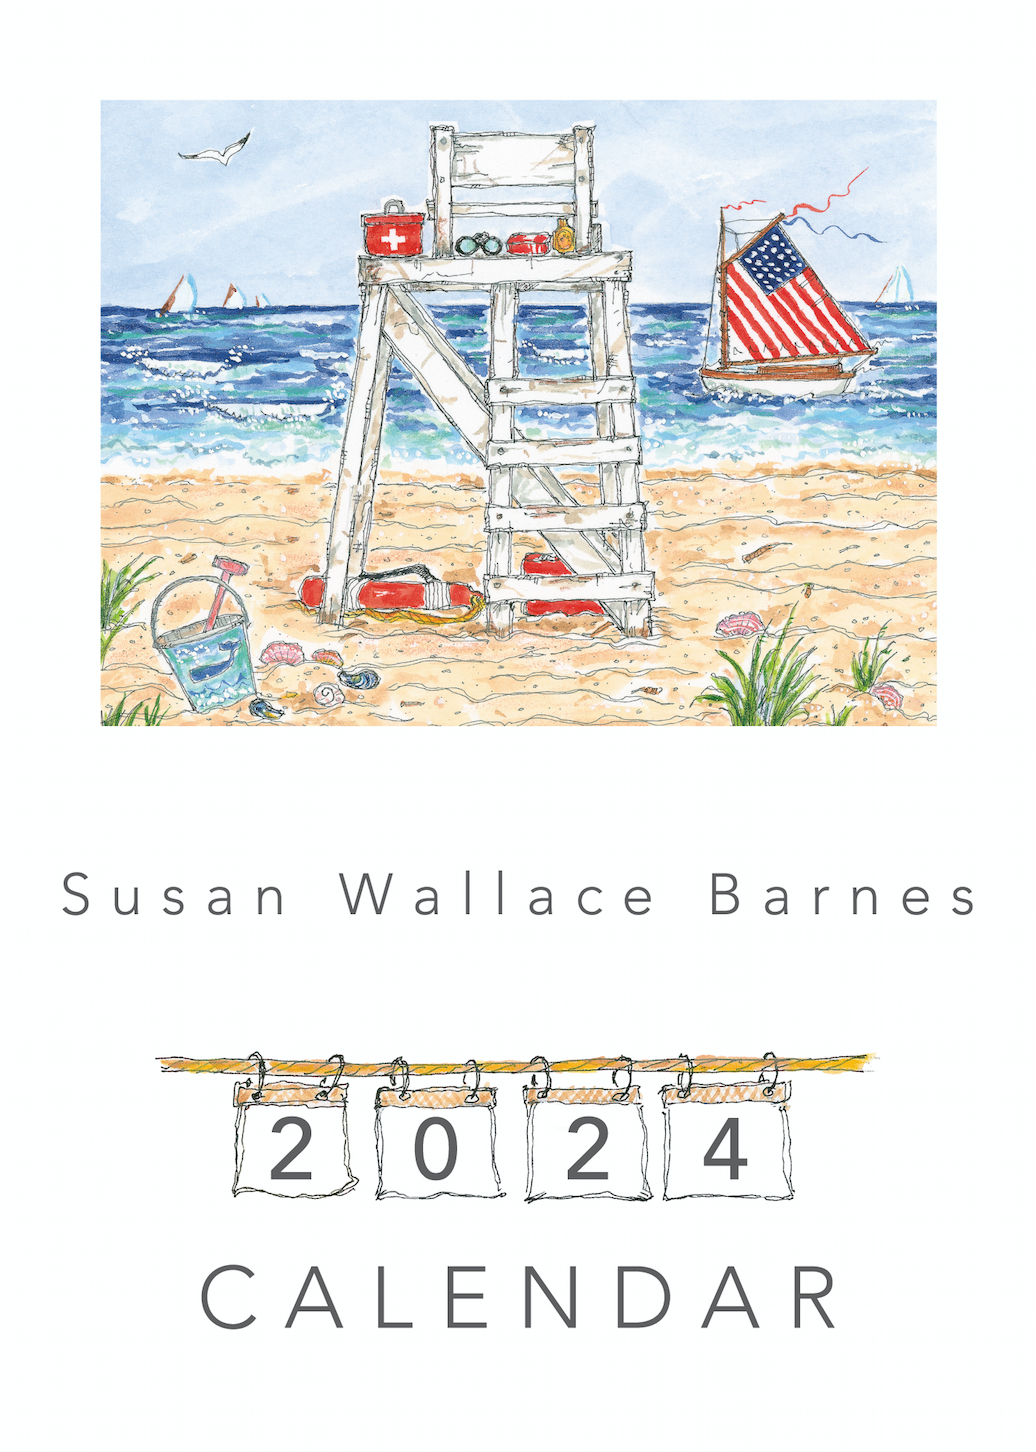 SUSAN WALLACE BARNES CALENDAR – SUSAN WALLACE BARNES CALENDARS